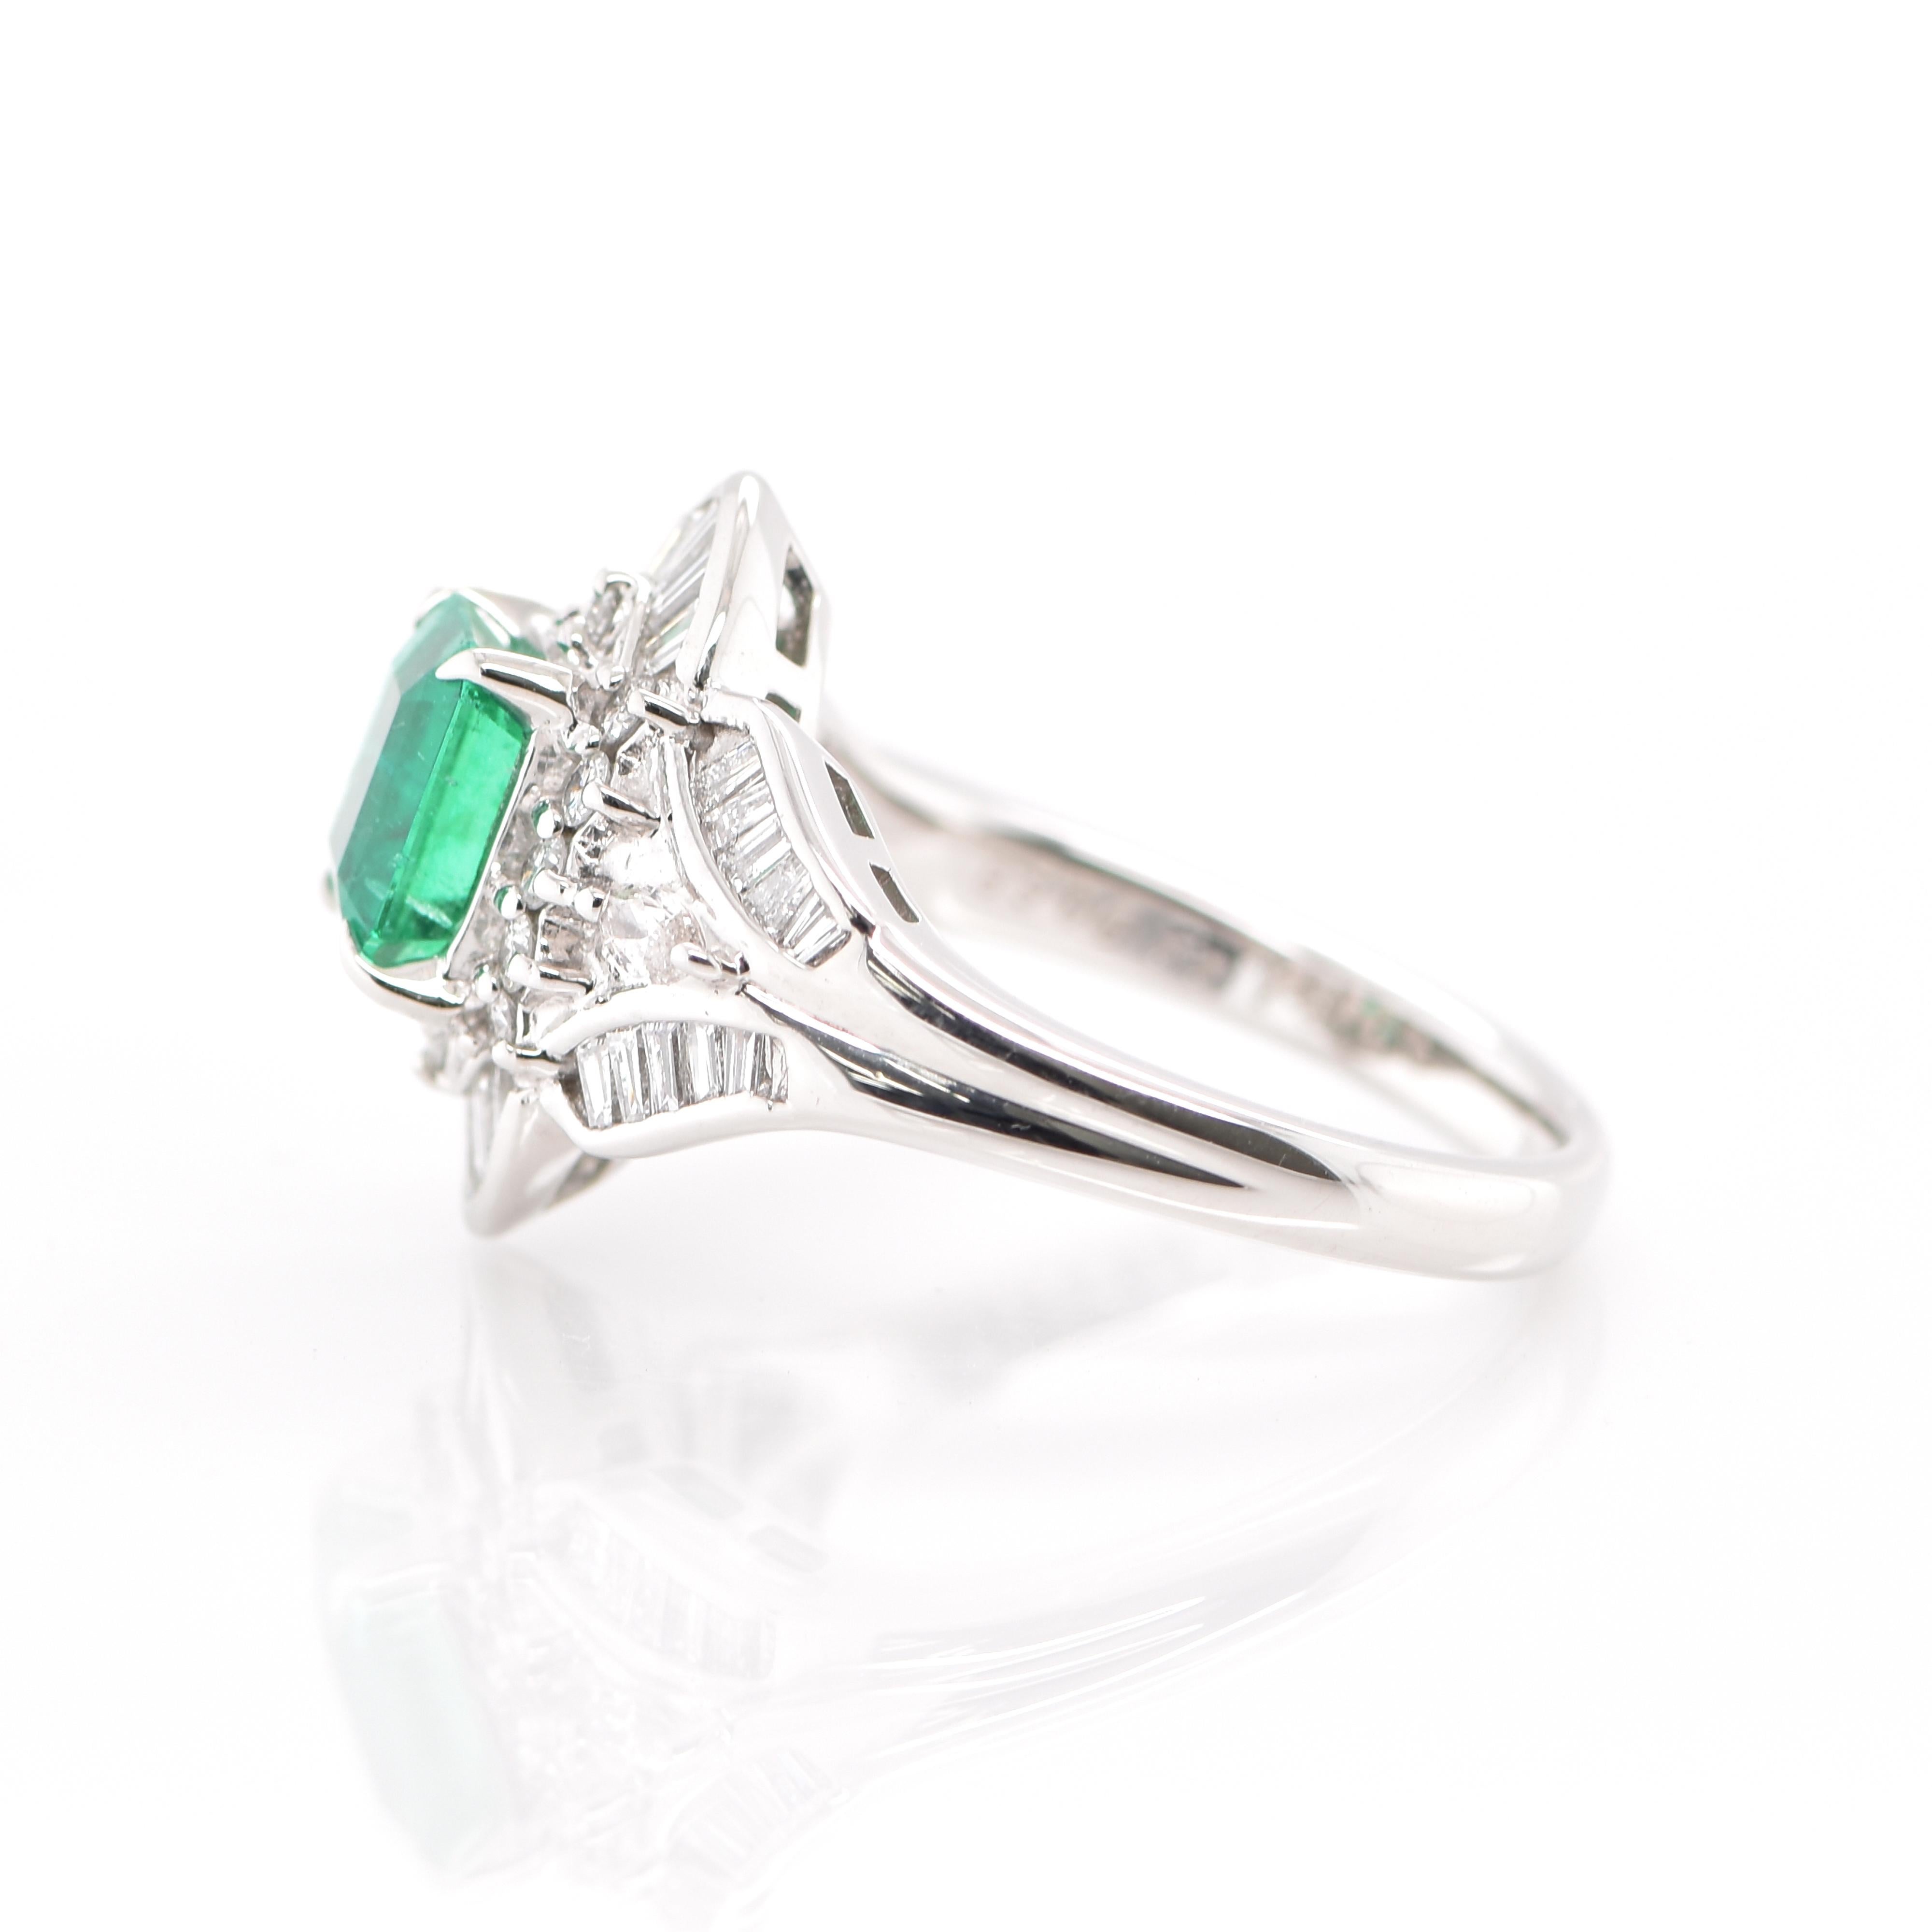 Women's Art Deco Style 1.44 Carat Emerald and Diamond Cocktail Ring Set in Platinum